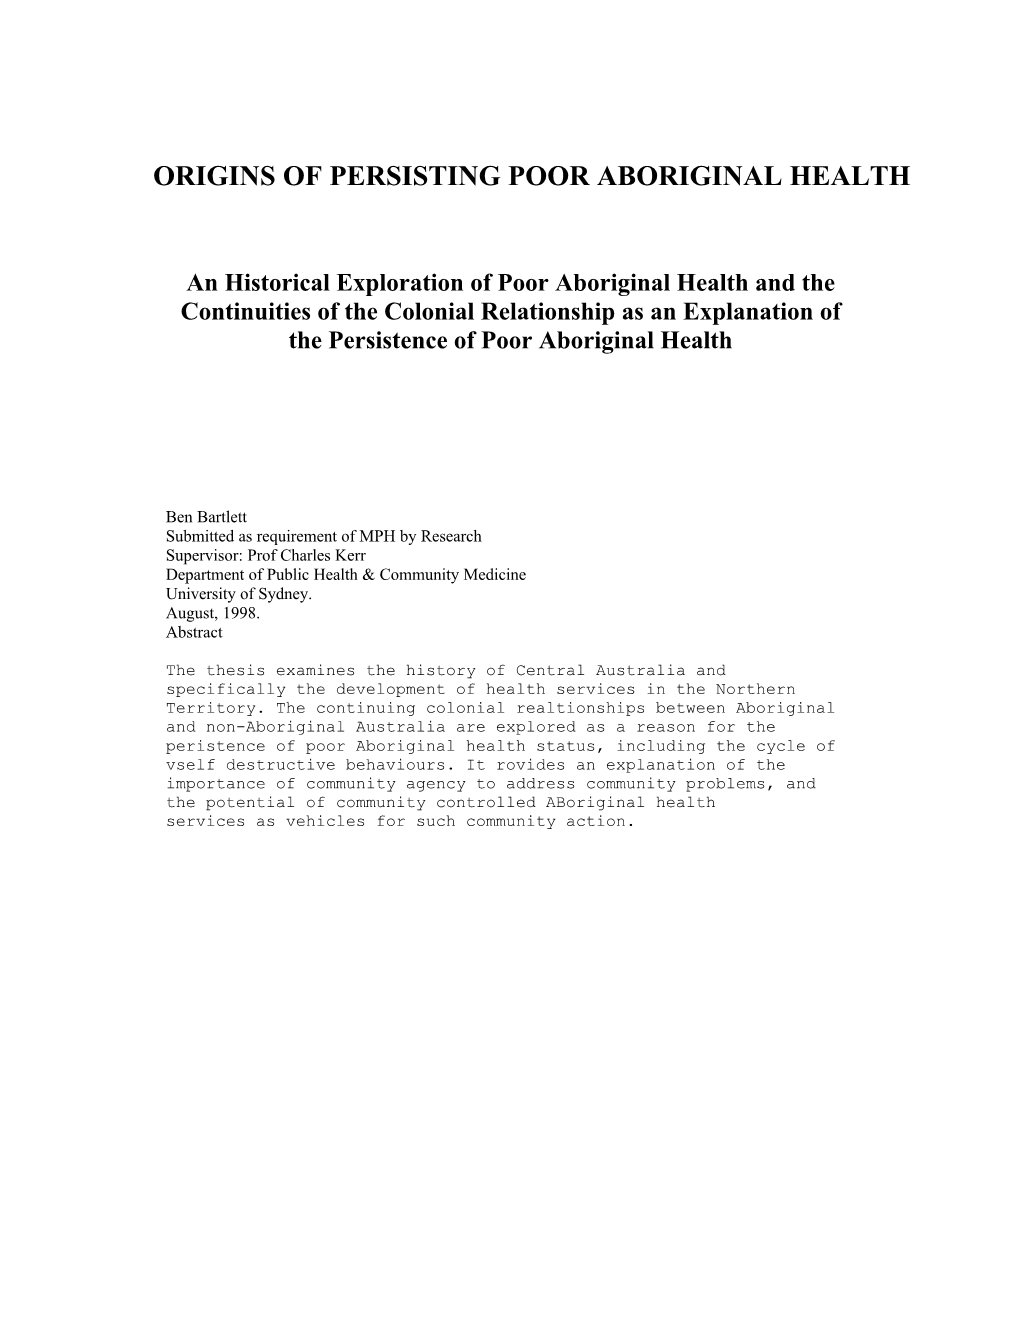 Origins of Persisting Poor Aboriginal Health